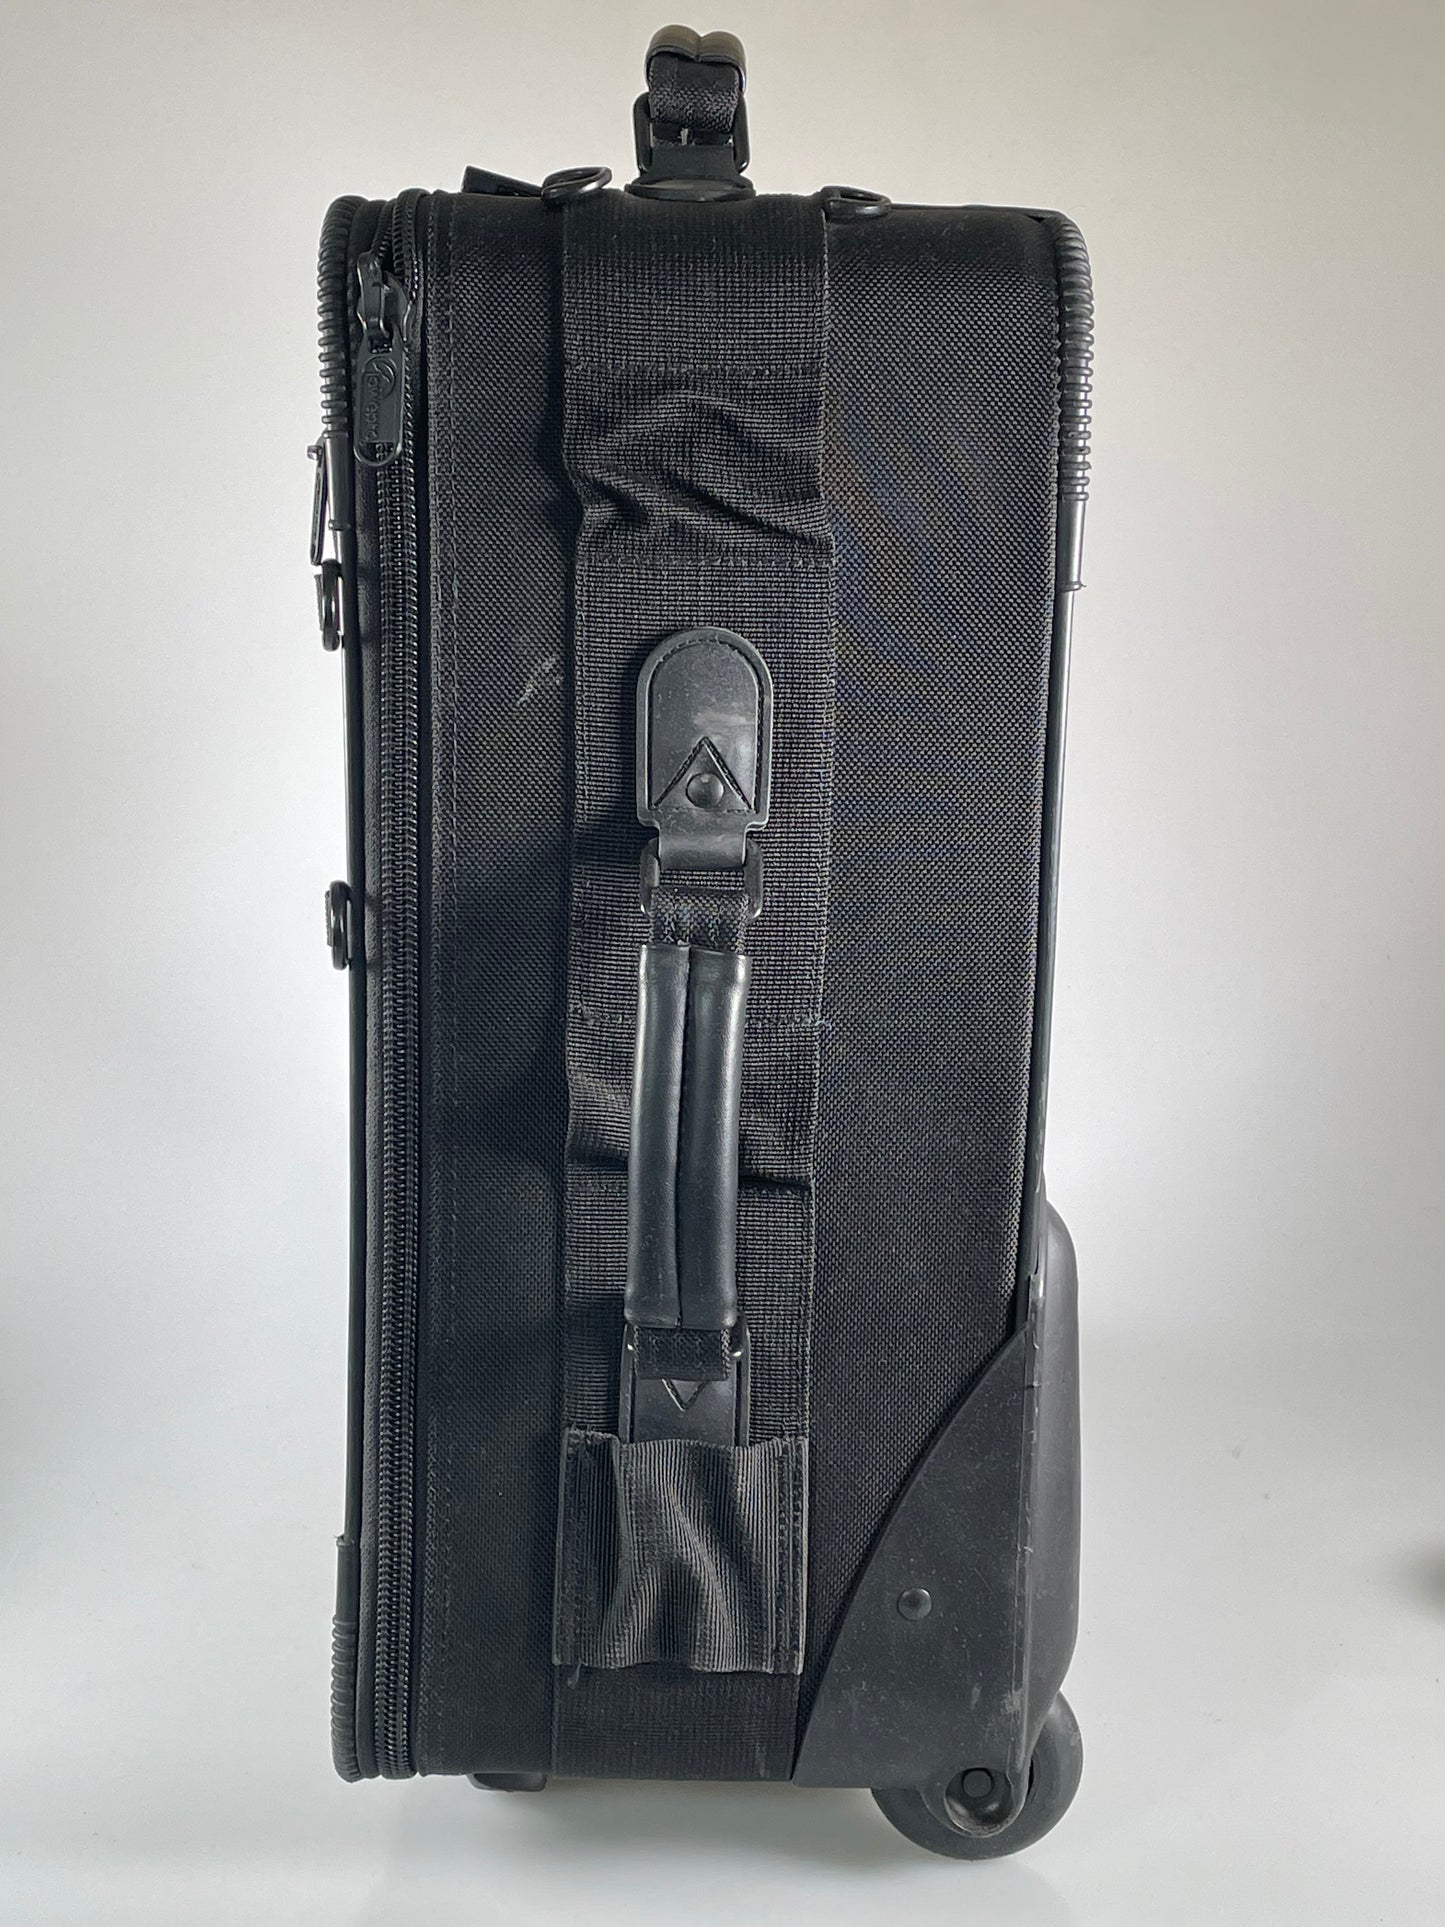 lowepro Rolling Camera Bag Black